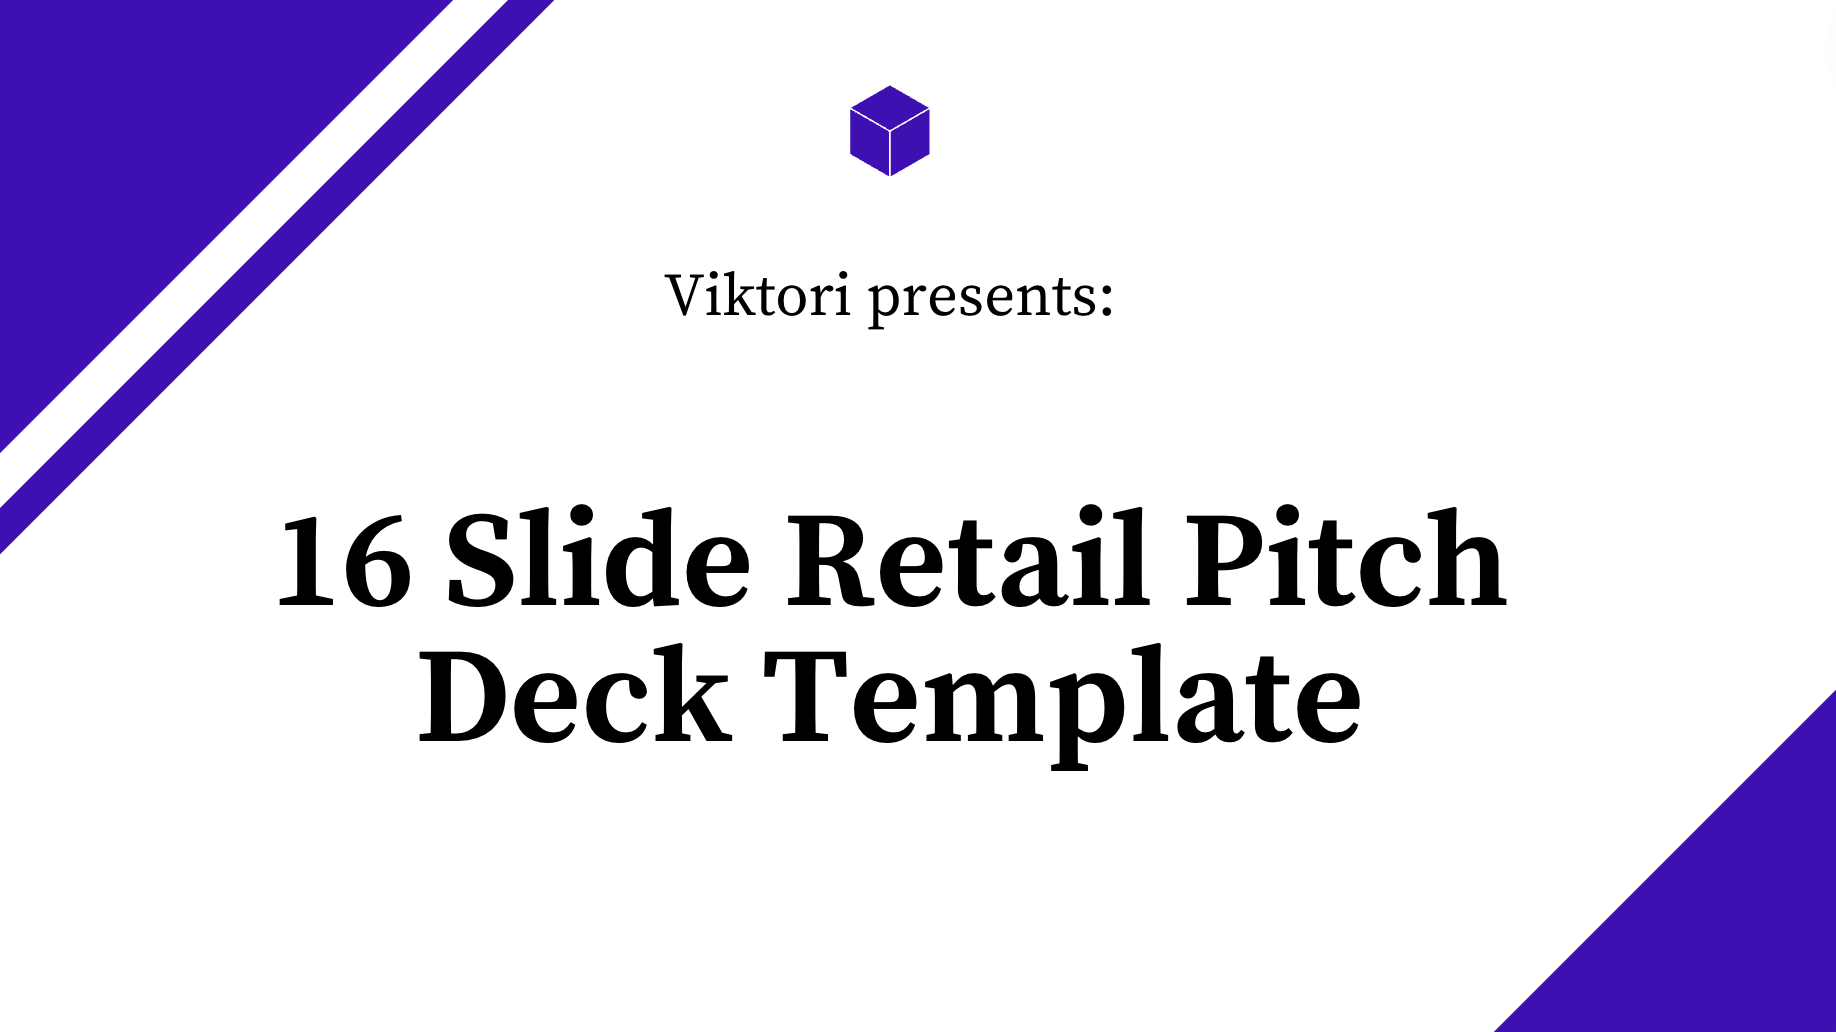 16 Slide Retail Pitch Deck Template